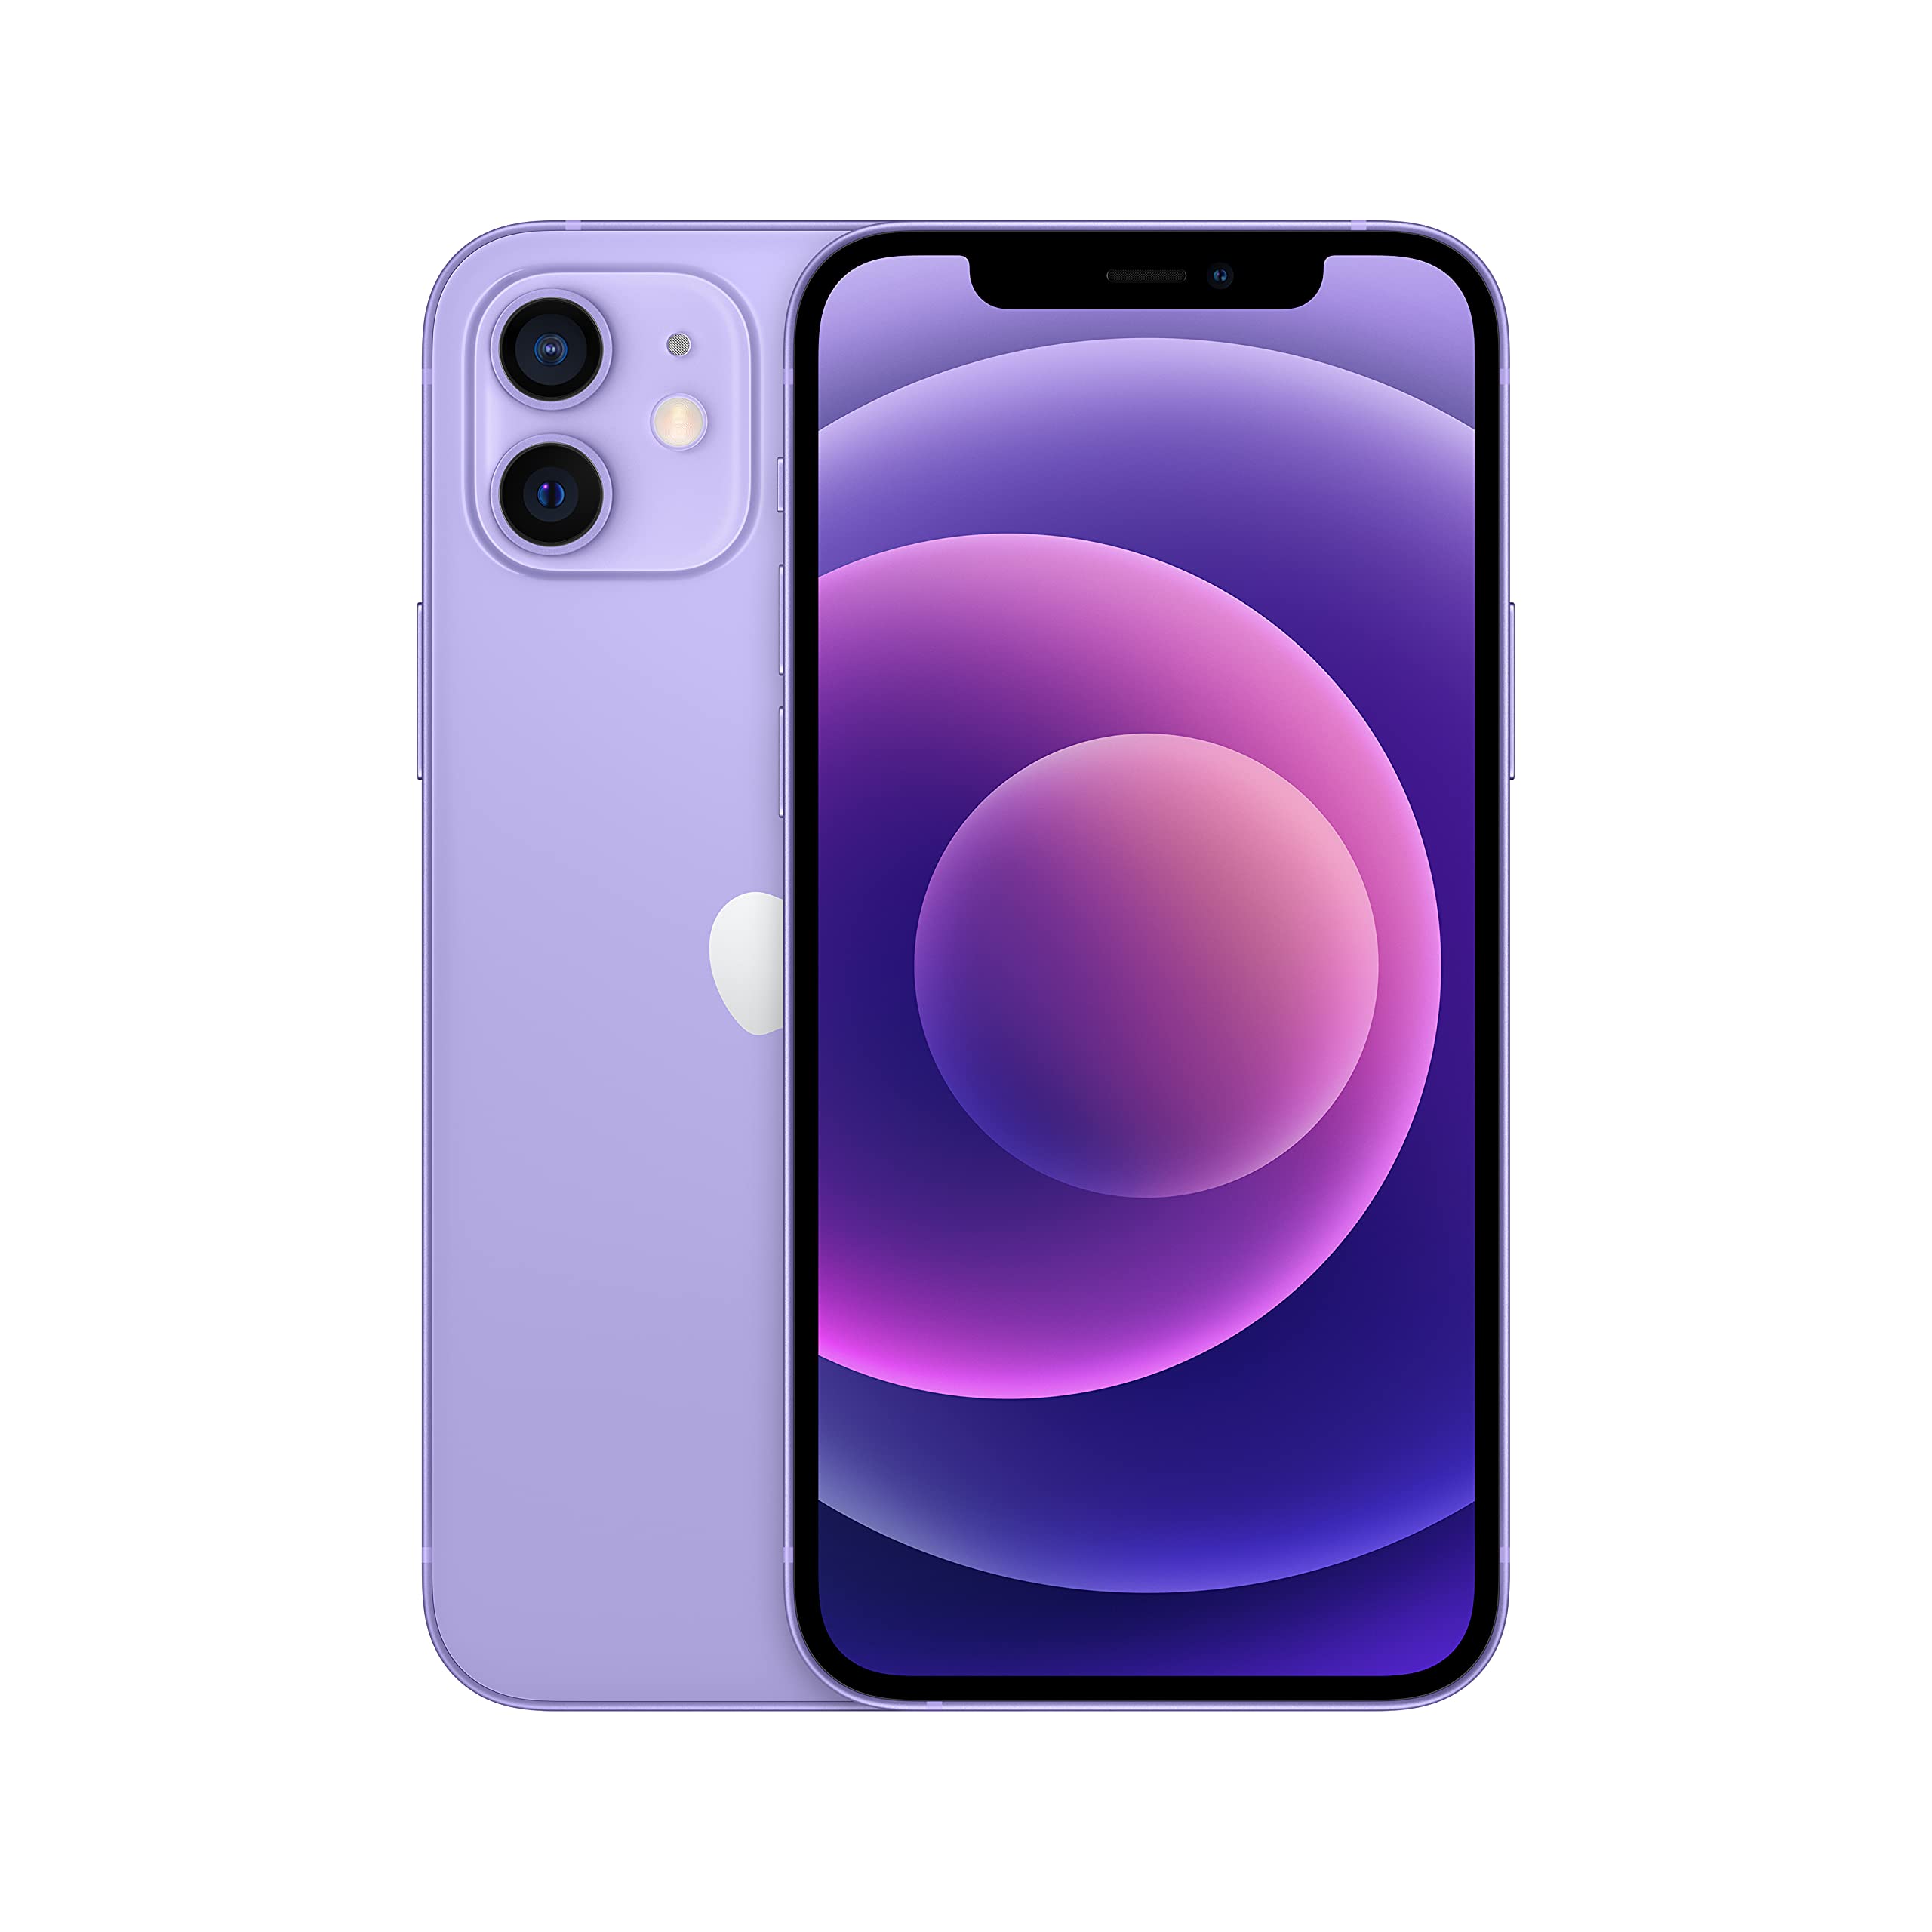 Apple iPhone 12 (64GB) - Purple (Renewed)